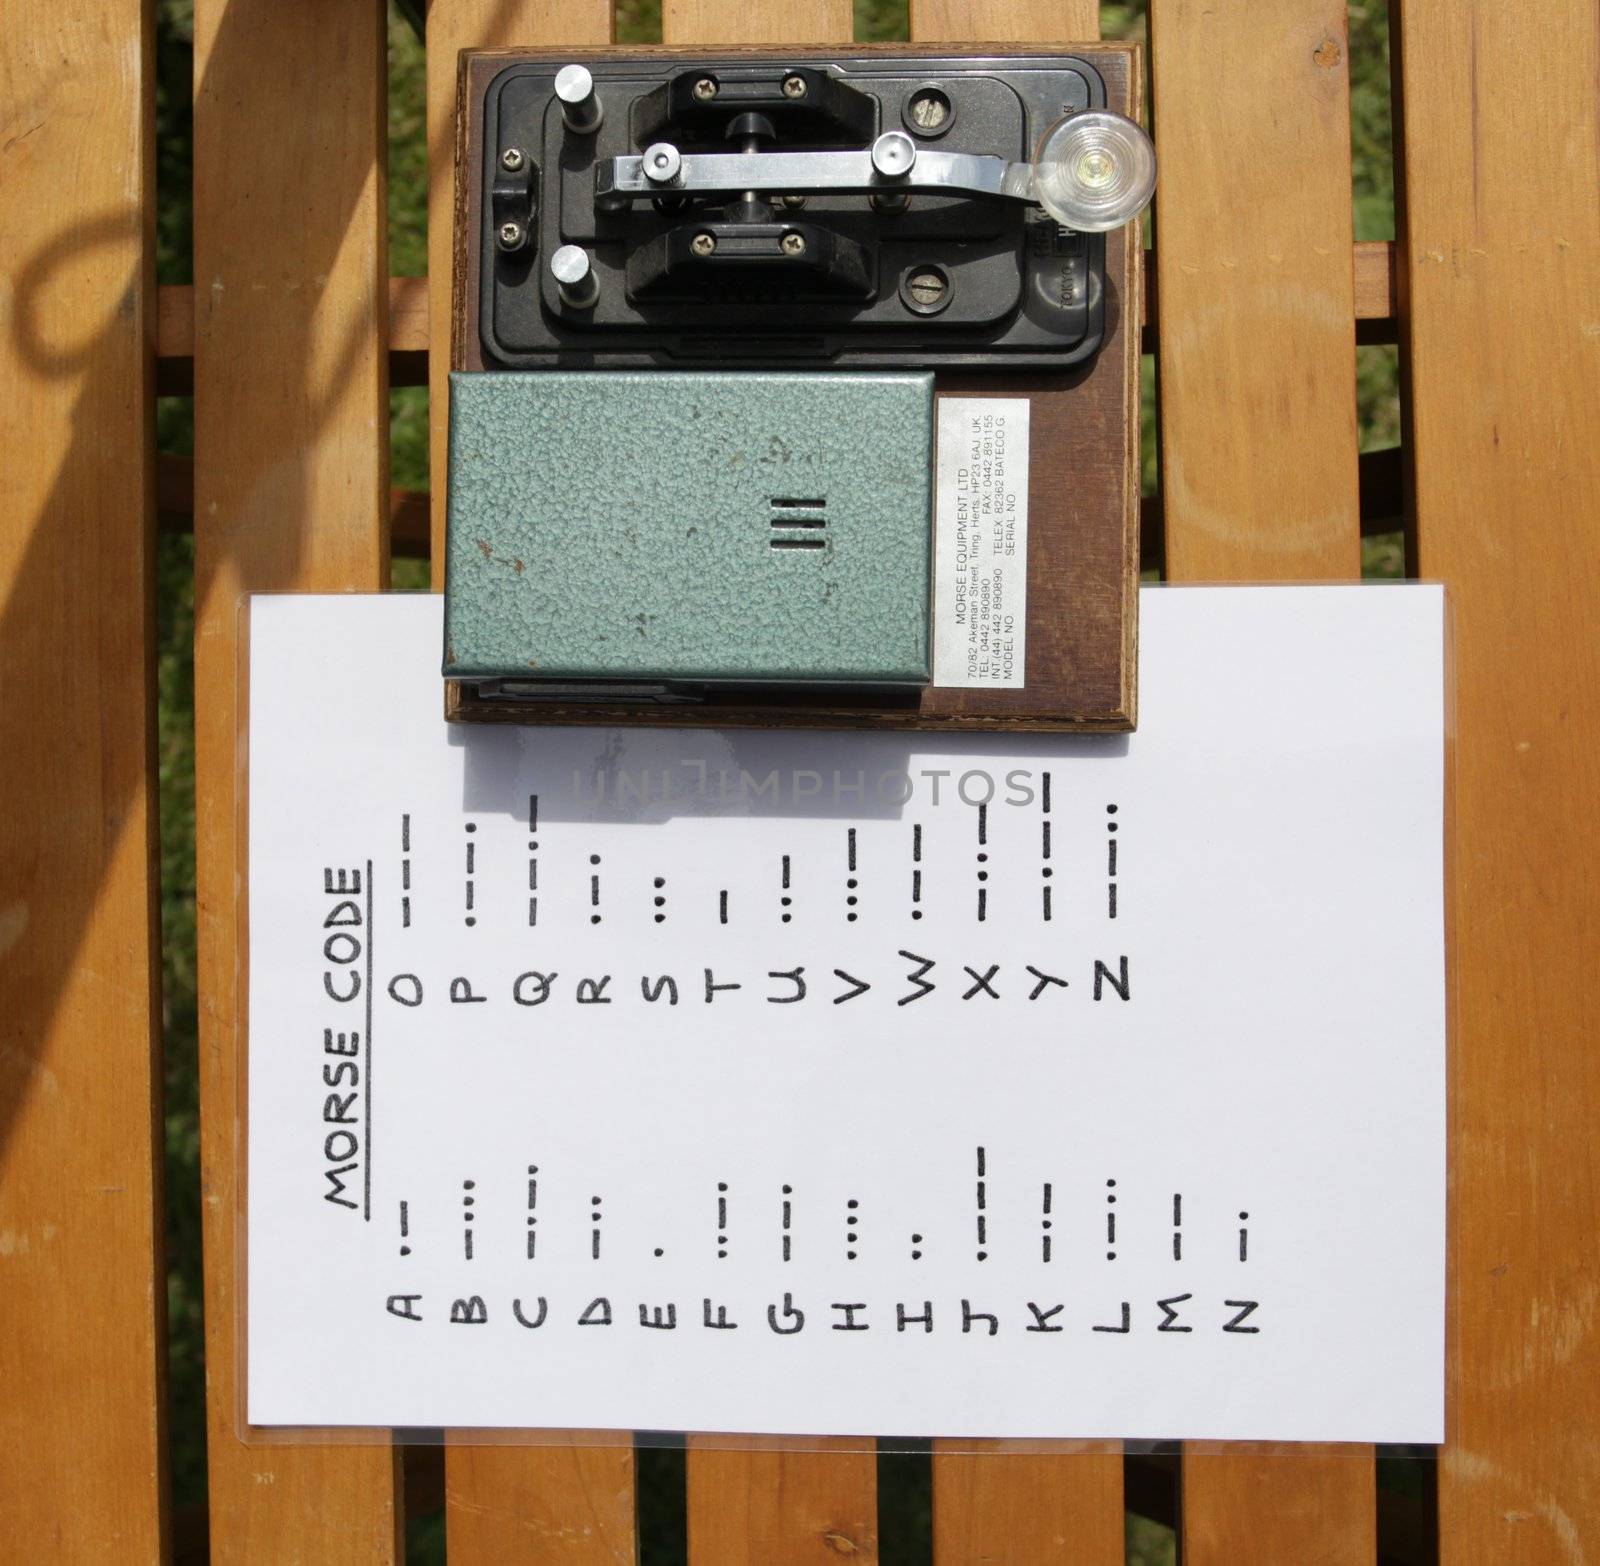 Morse code transmitter by olliemt